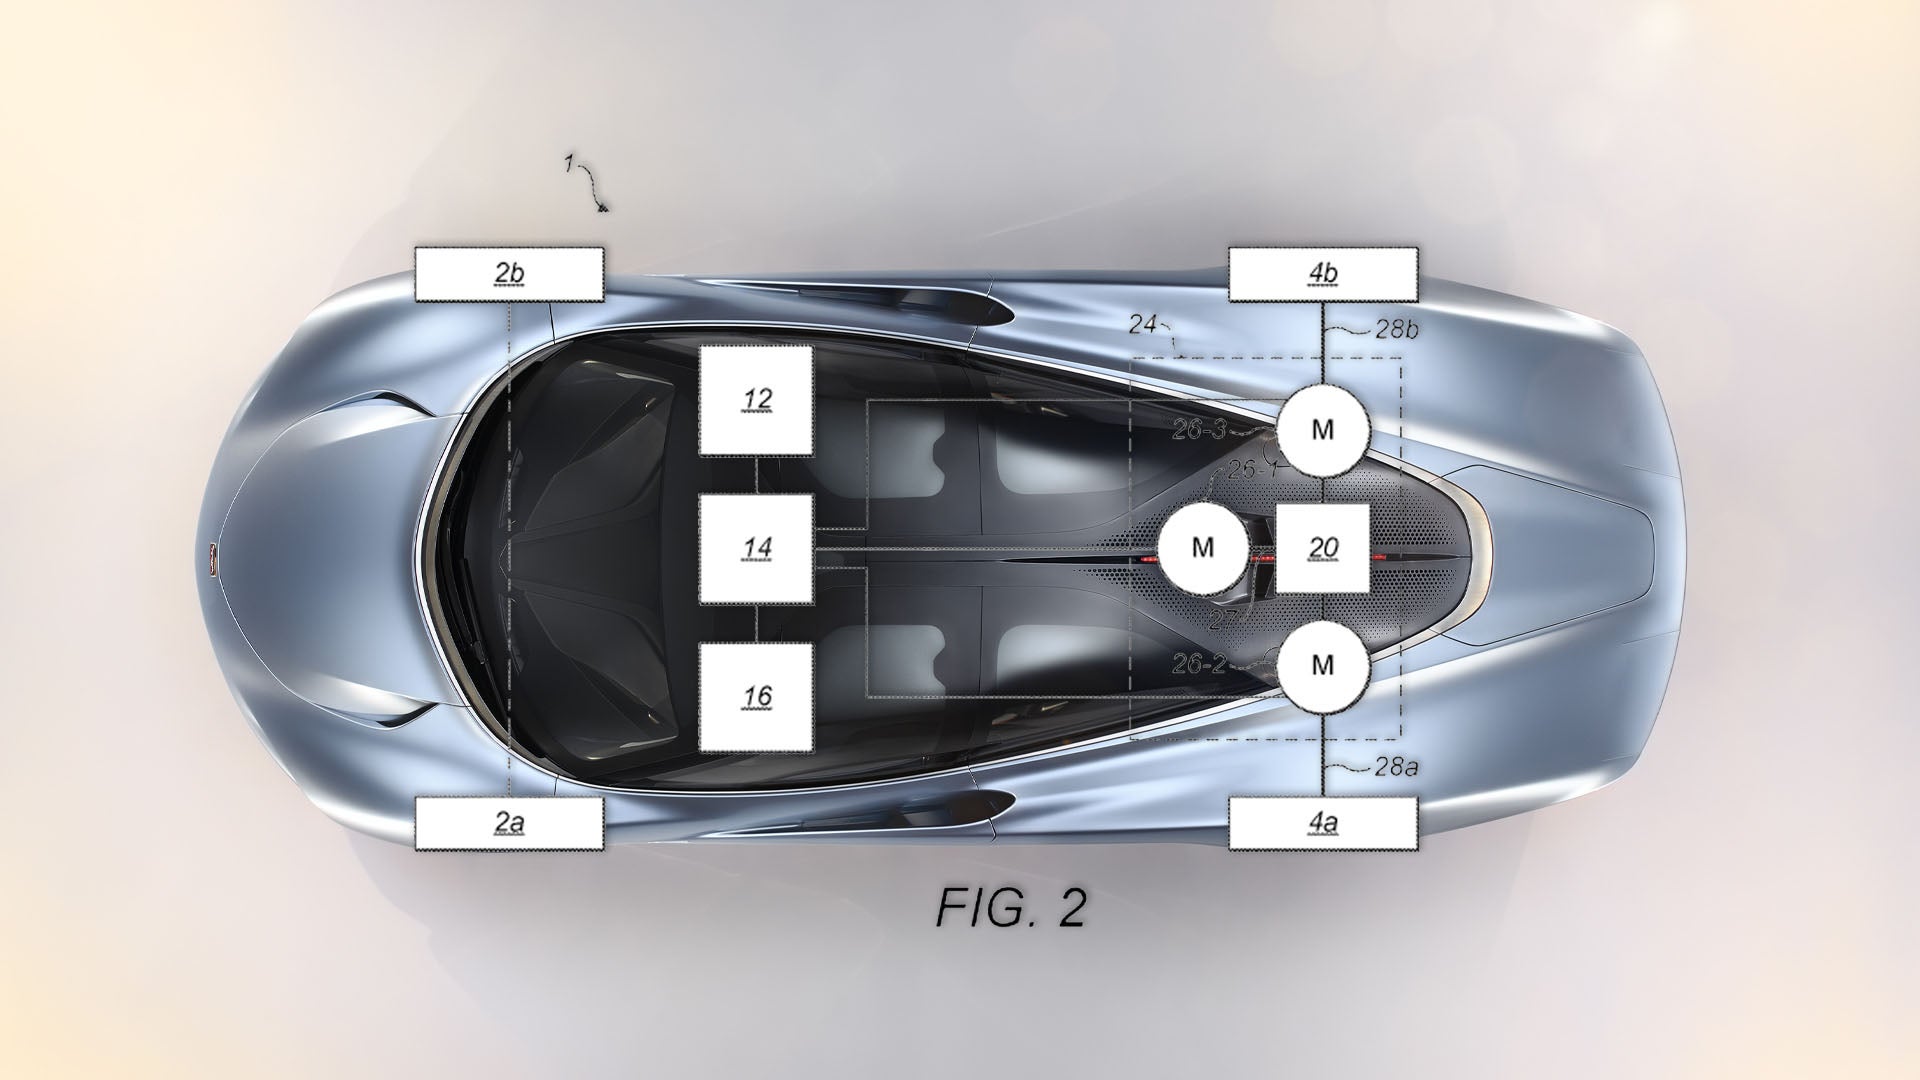 McLaren Patent Filing Reveals Advanced Triple-Motor Rear Axle for Electric Supercar